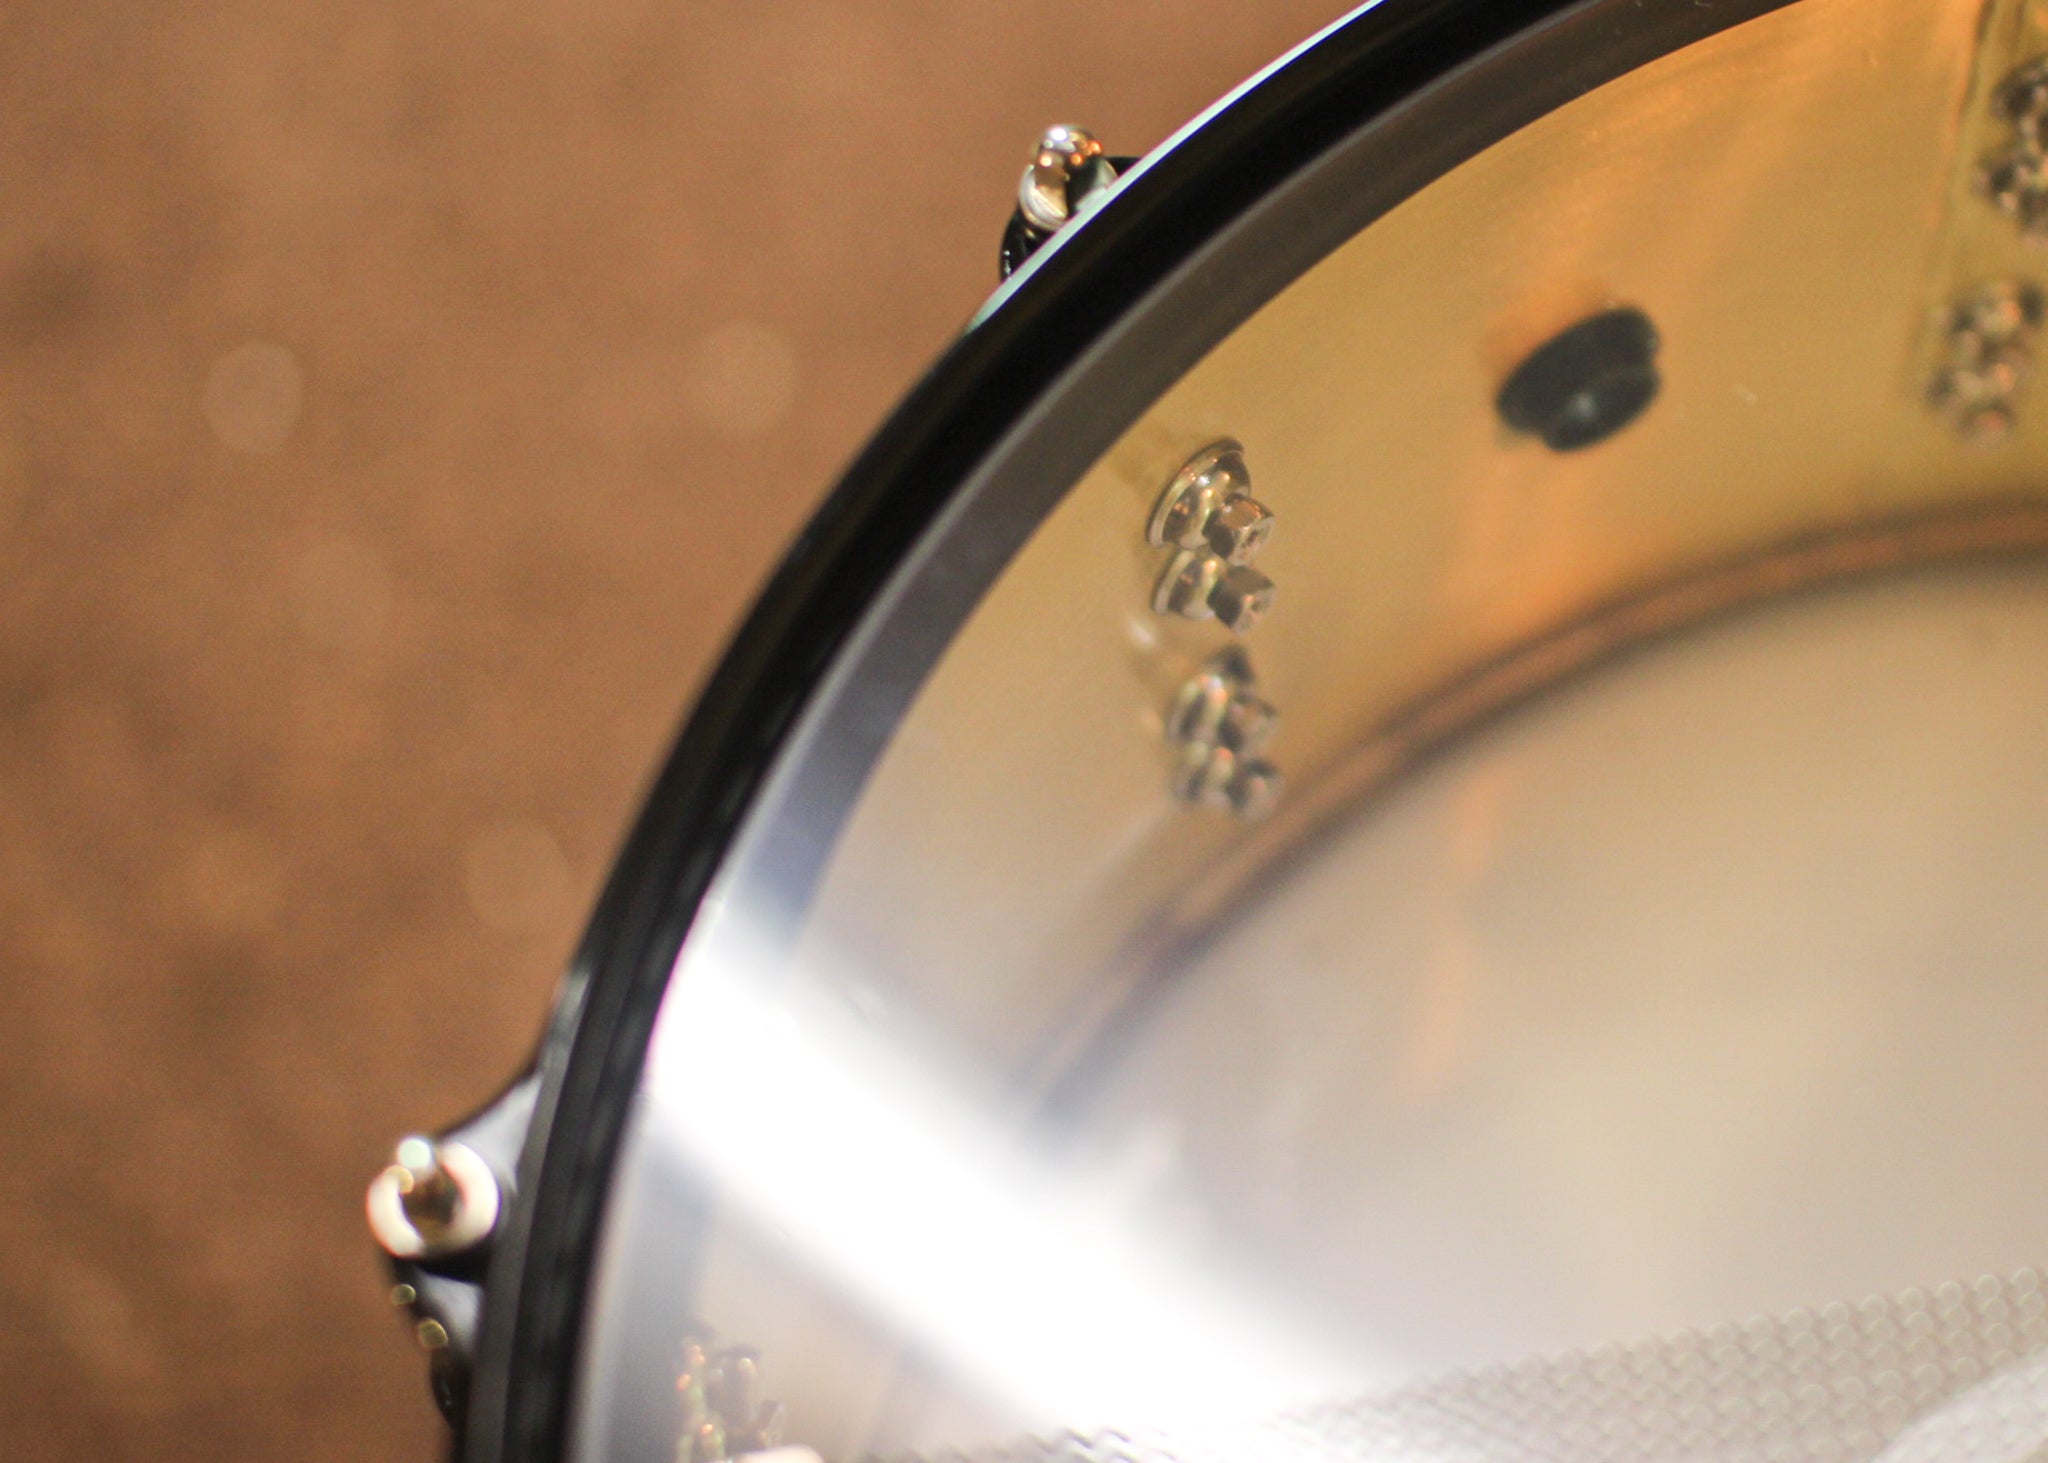 Pearl 14x6 Matt Halpern Signature Brass Snare Drum – The Drum Shop